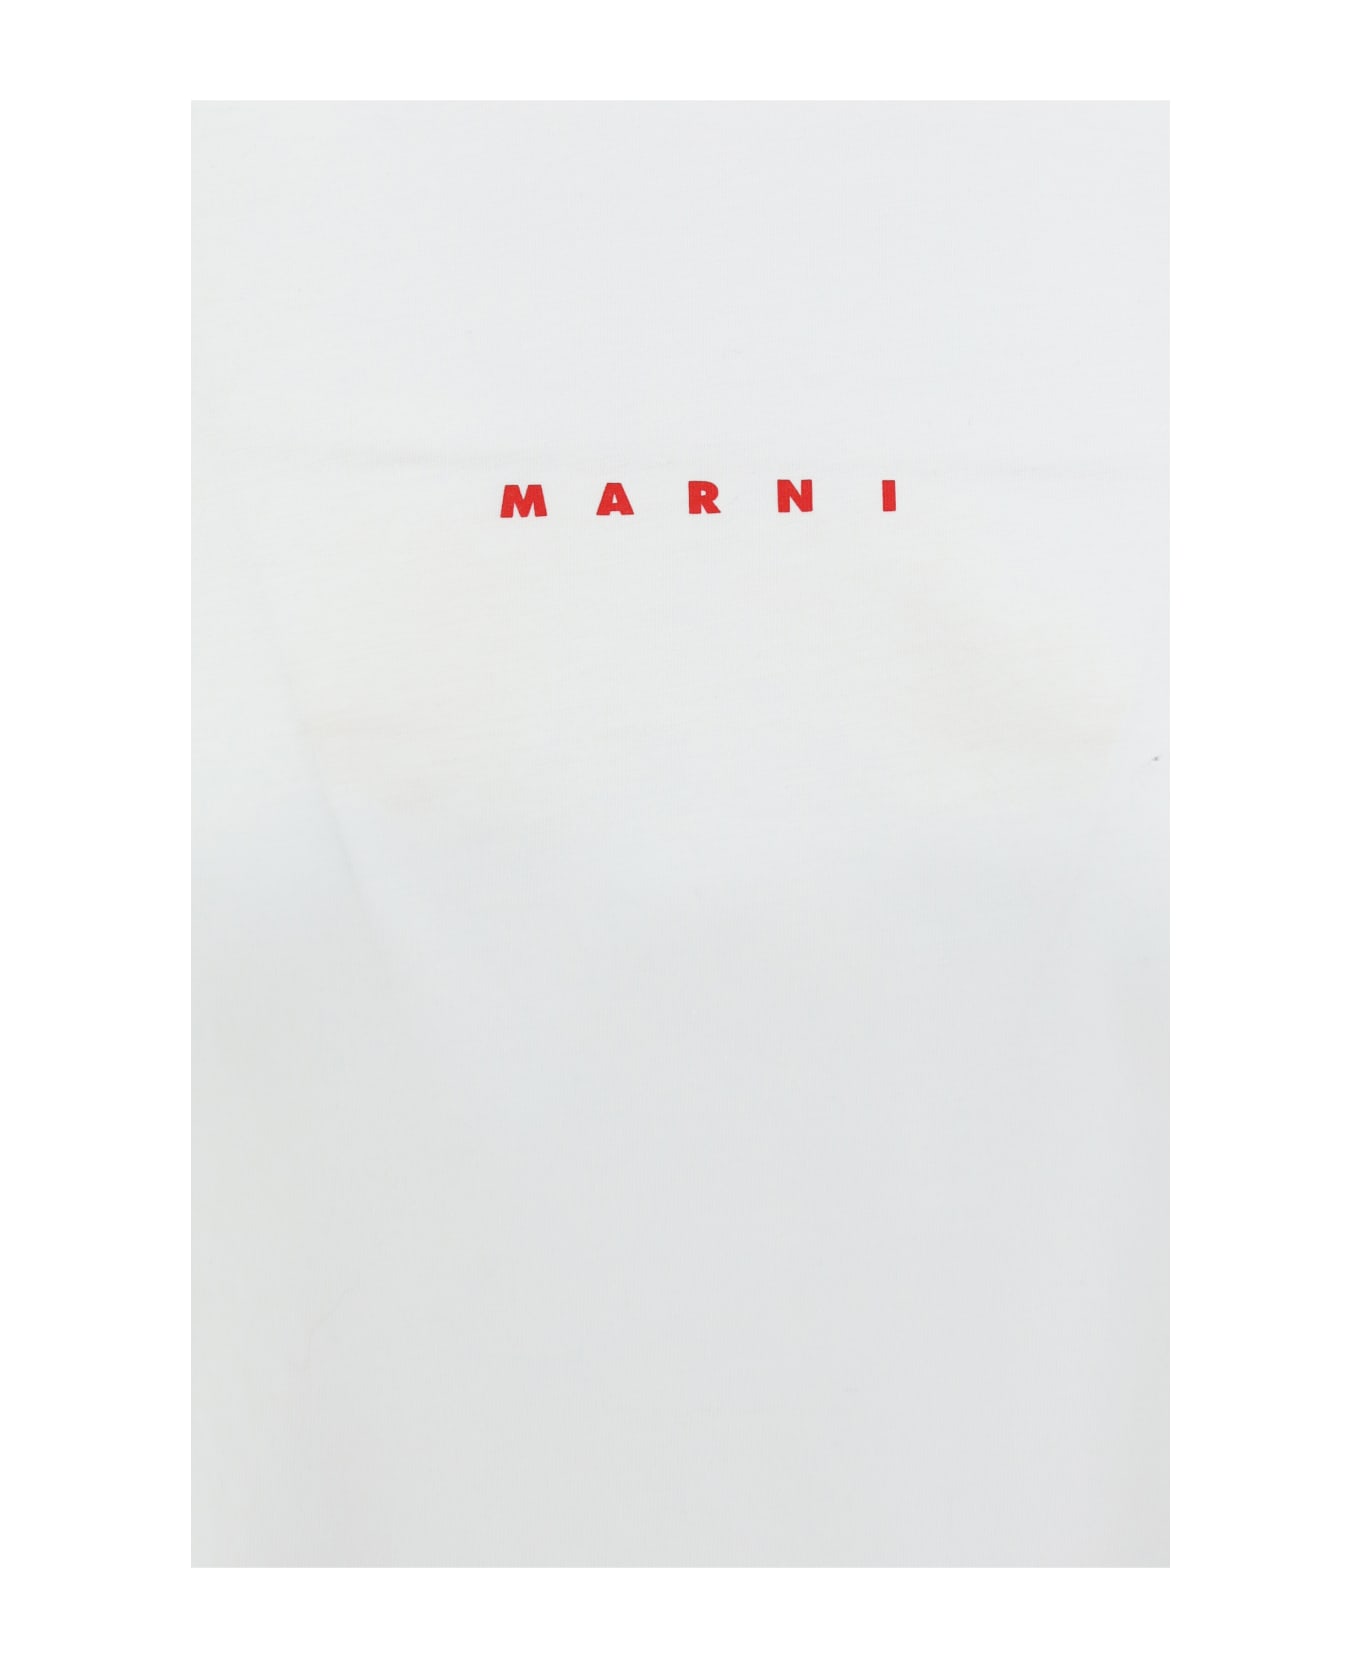 Marni Organic Logo T-shirt - Lily White